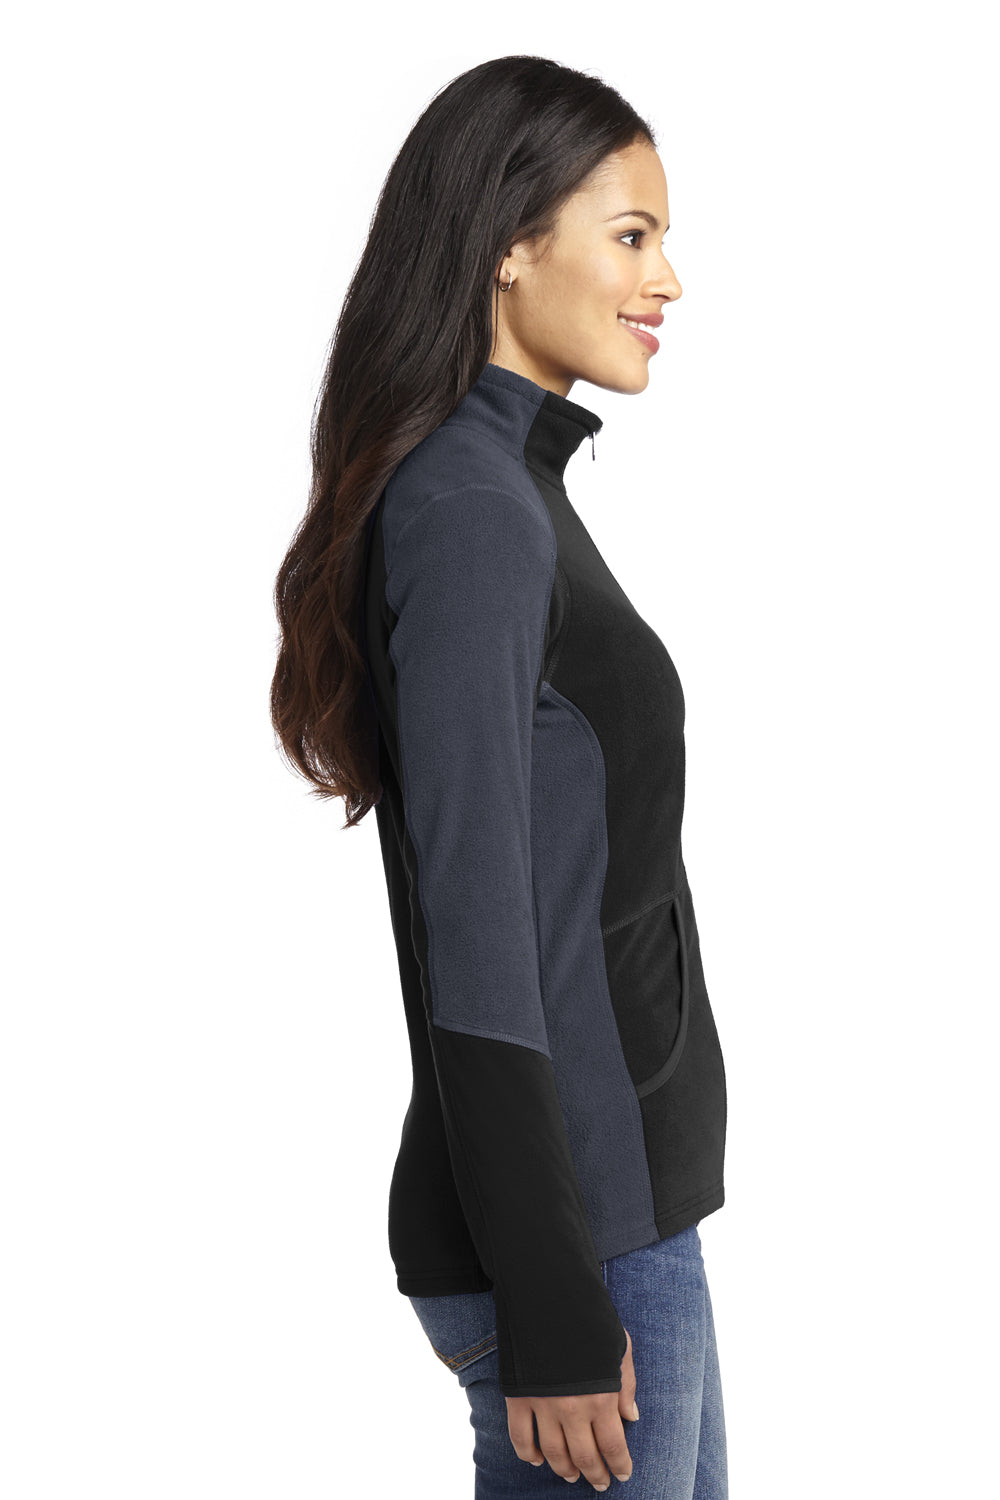 Port Authority L230 Womens Full Zip Microfleece Jacket Black/Grey Side